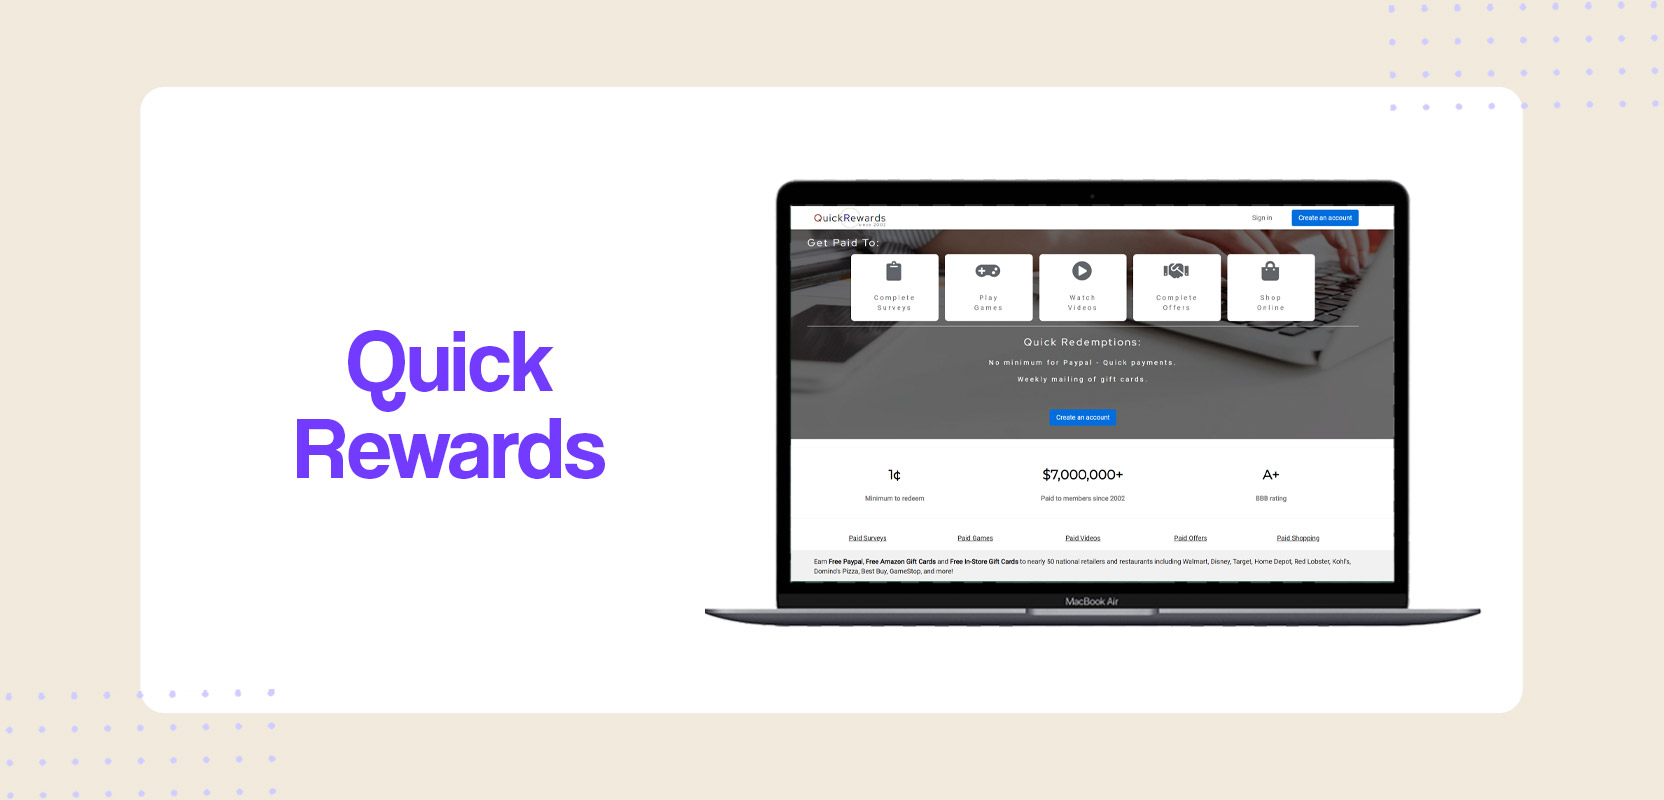 Laptop showing the Quick Rewards website